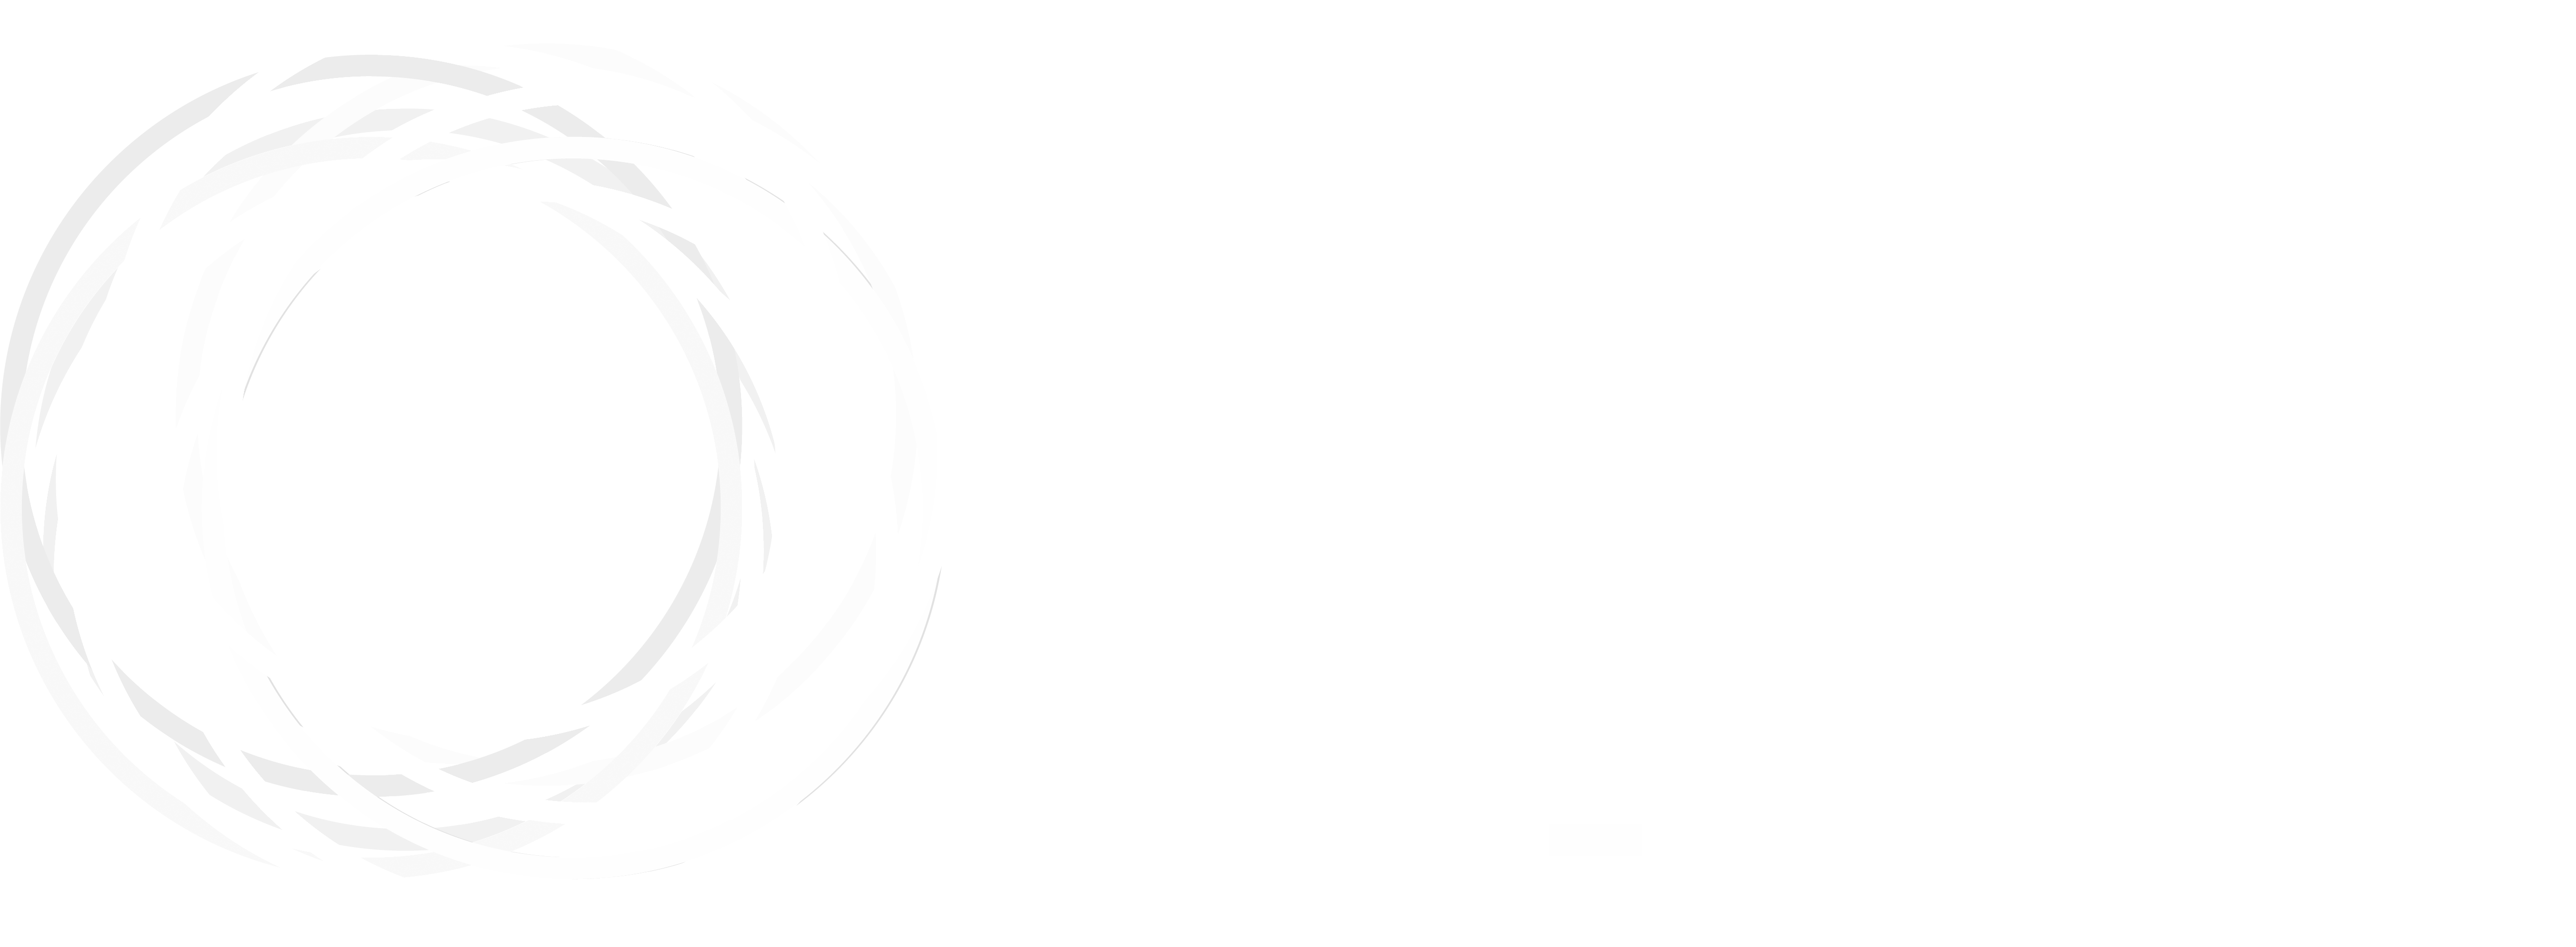 Consejo Agenda 2030